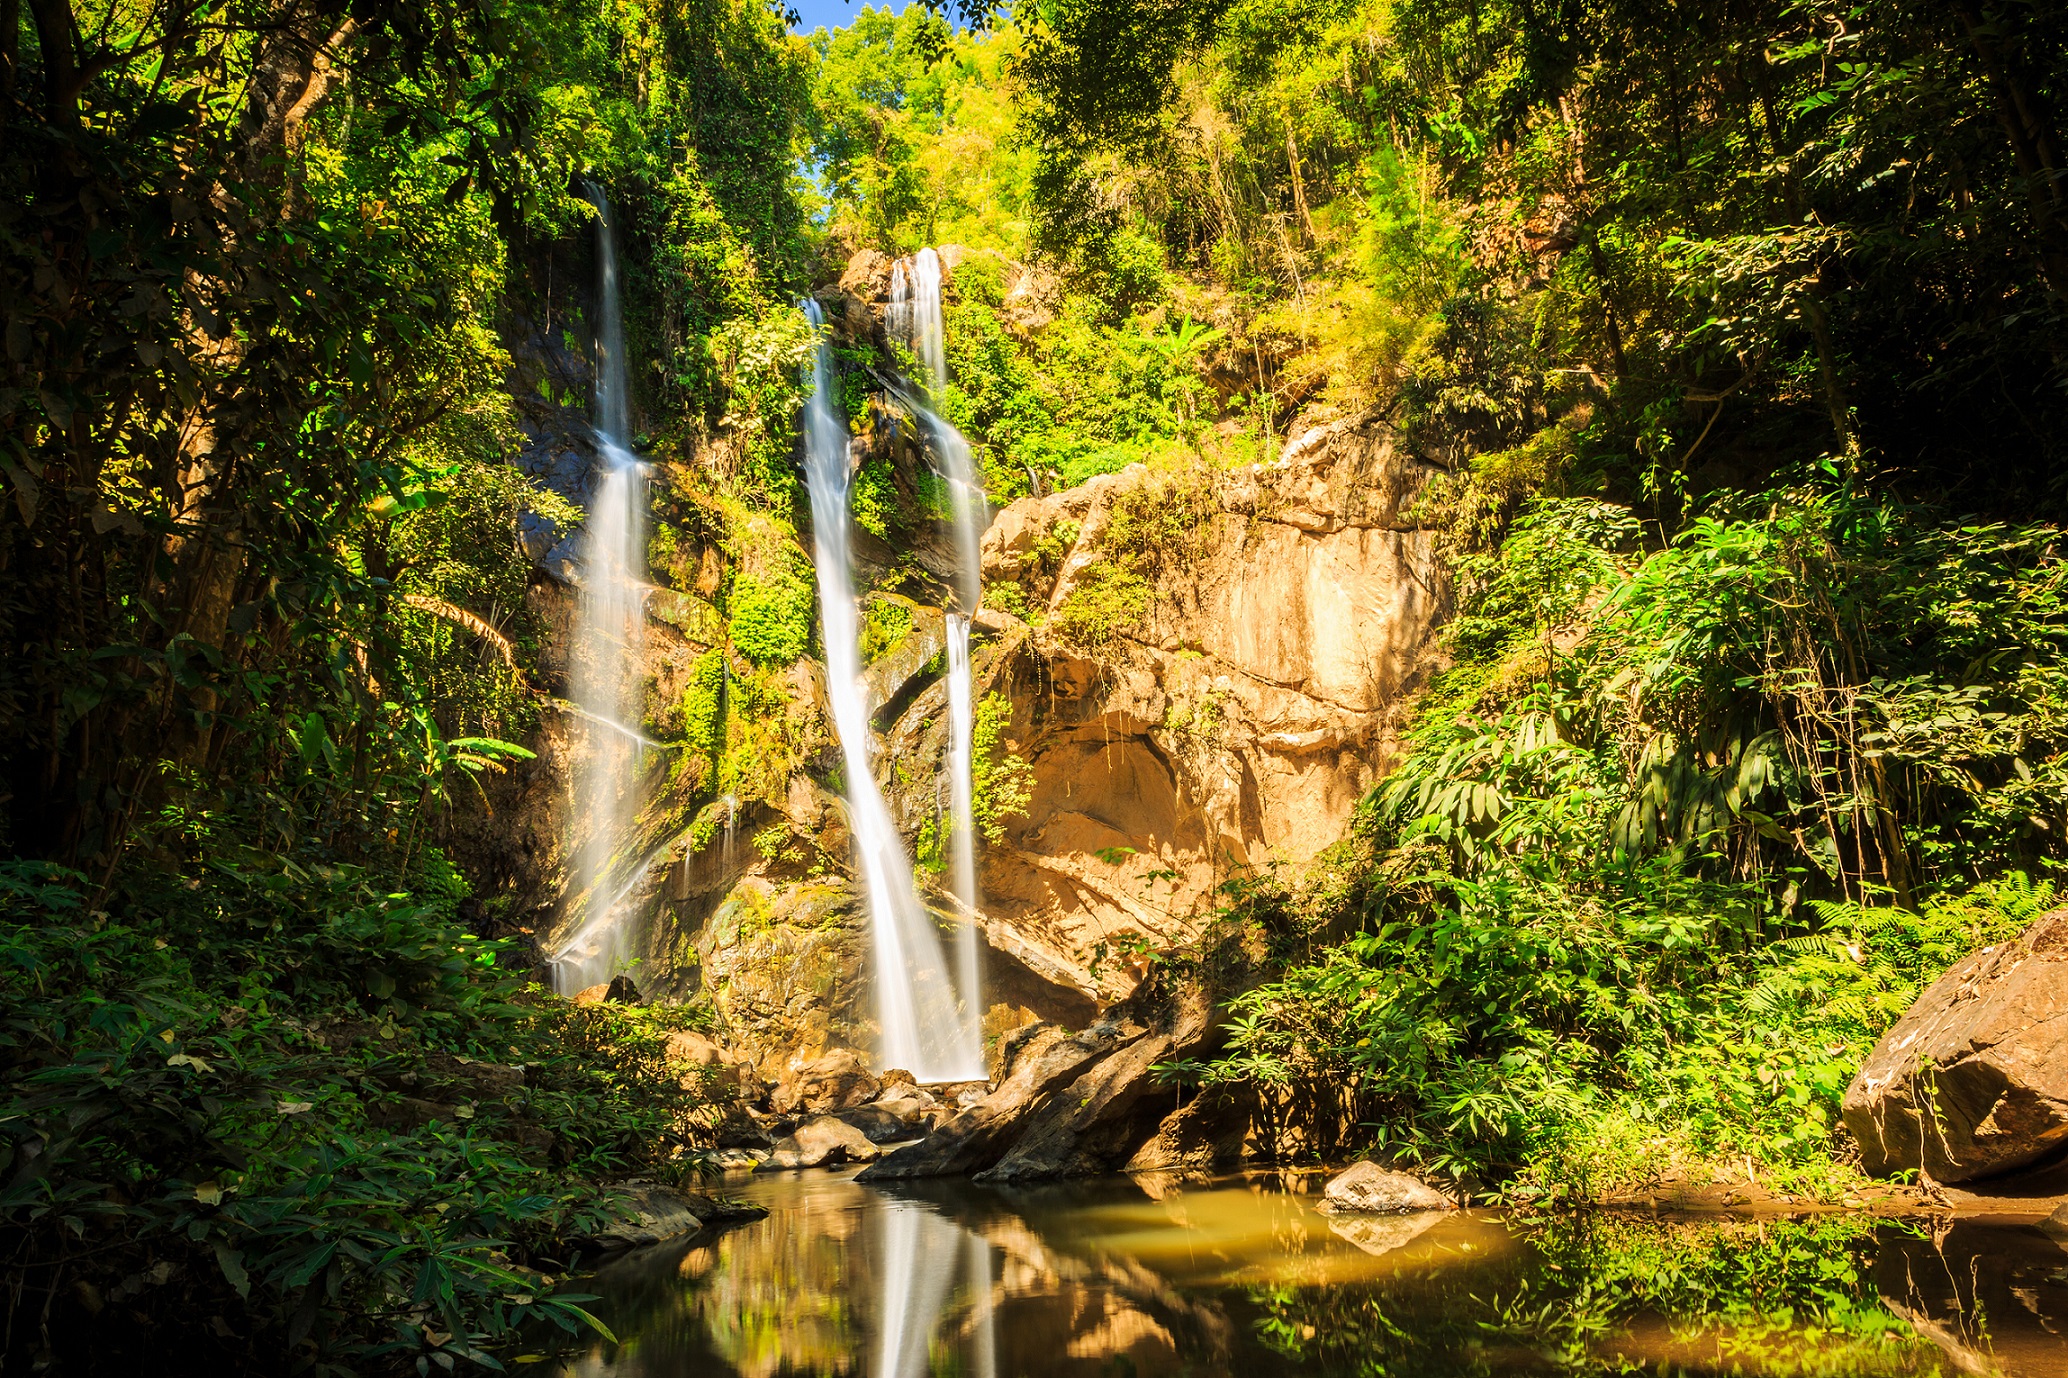 Mok Fah Waterfall